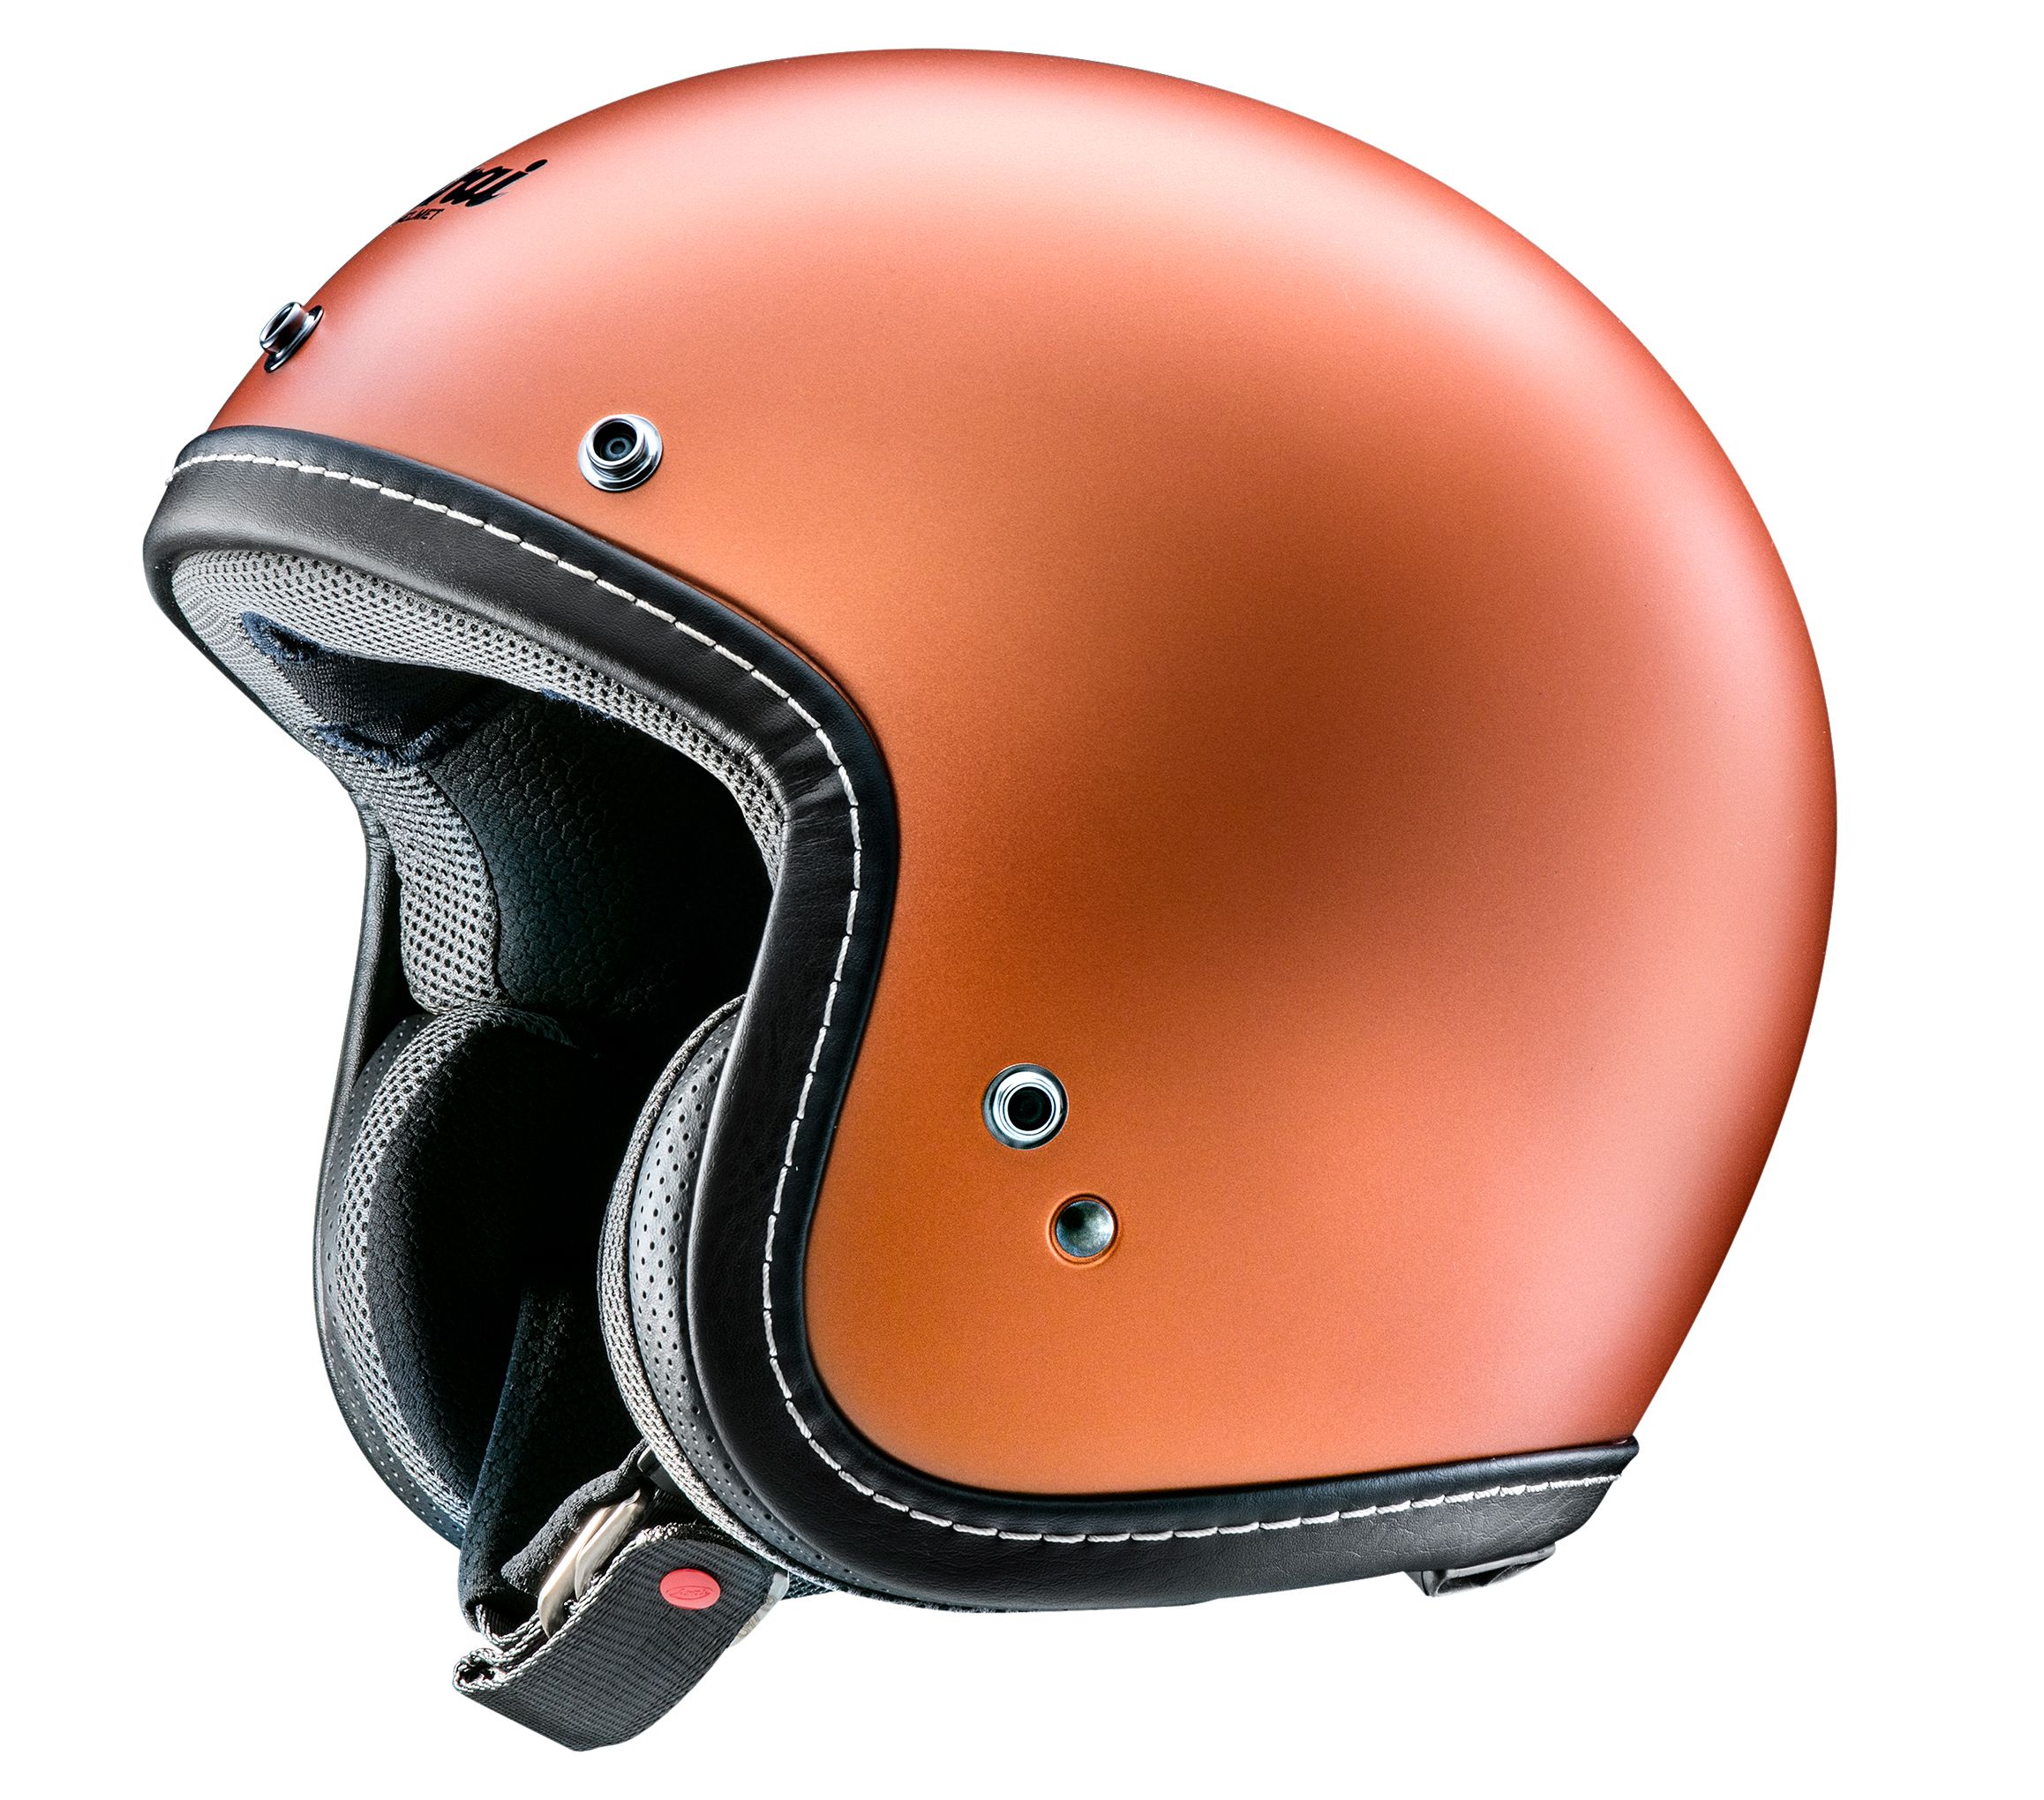 Arai Quantum–X Test: Every Day Motorcycle Helmet